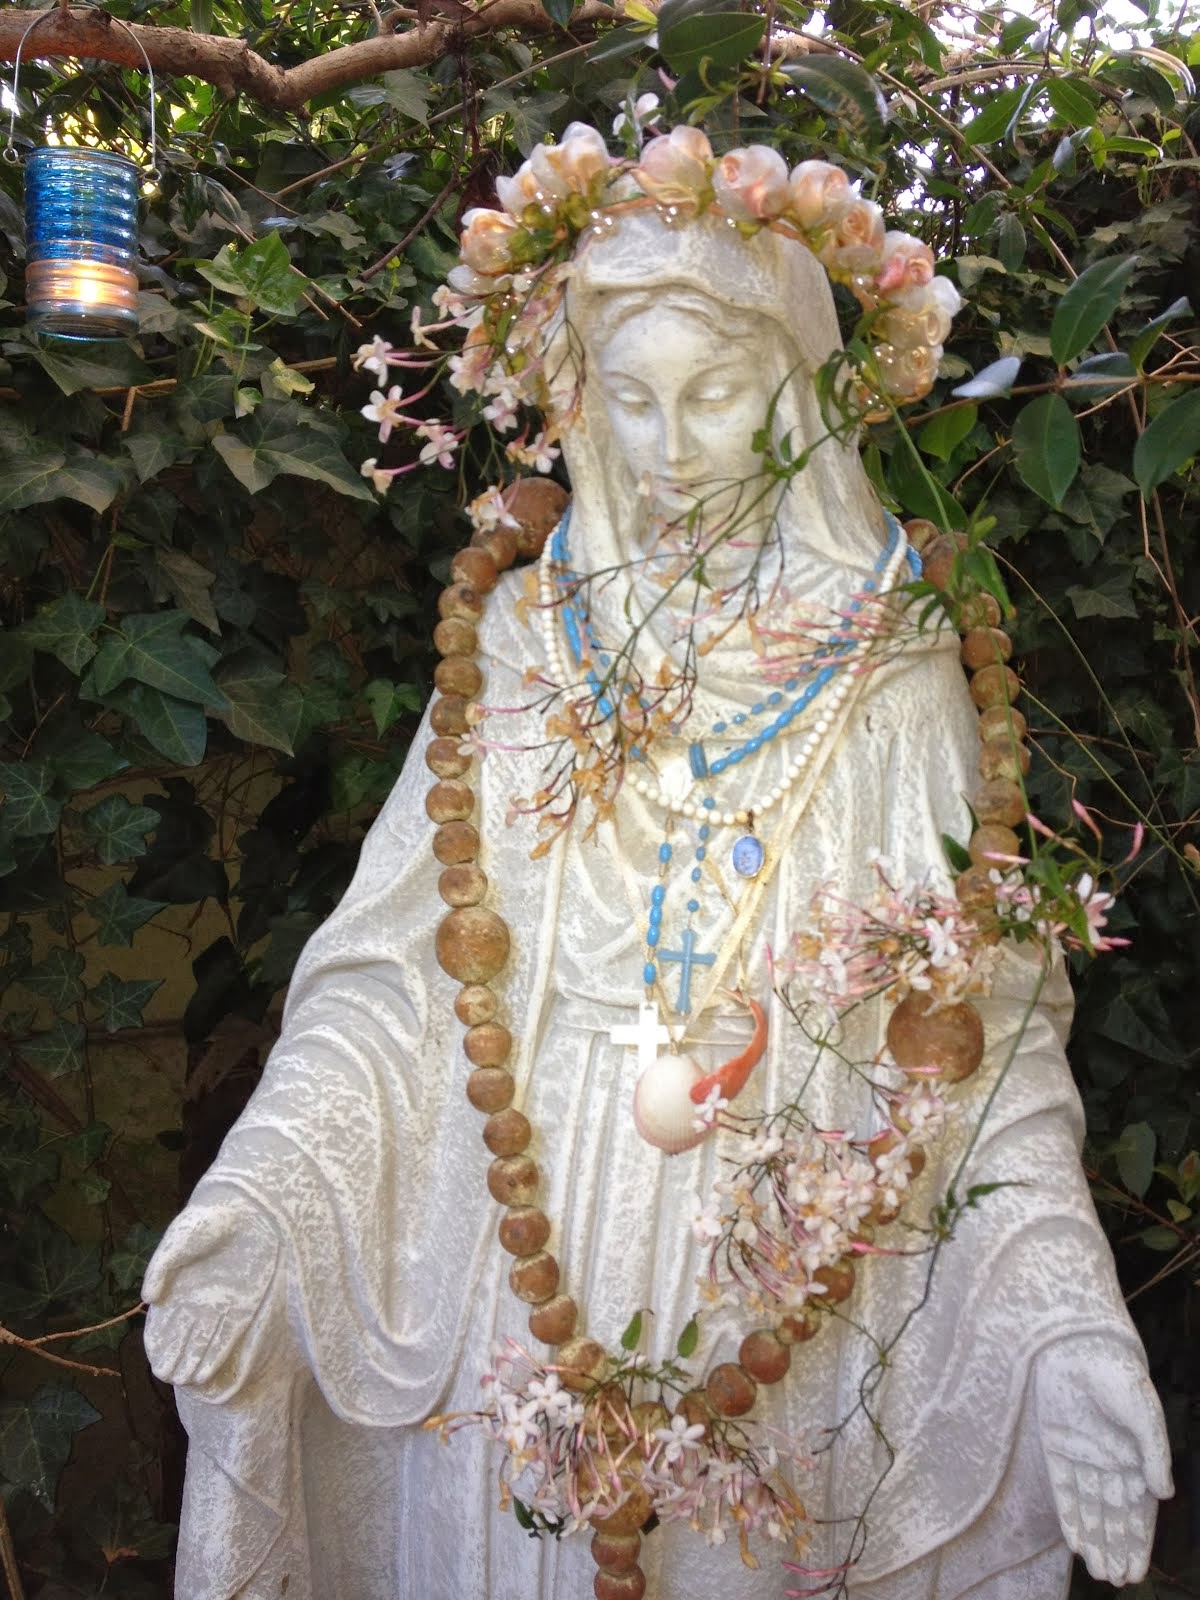 Mary shrine in my garden